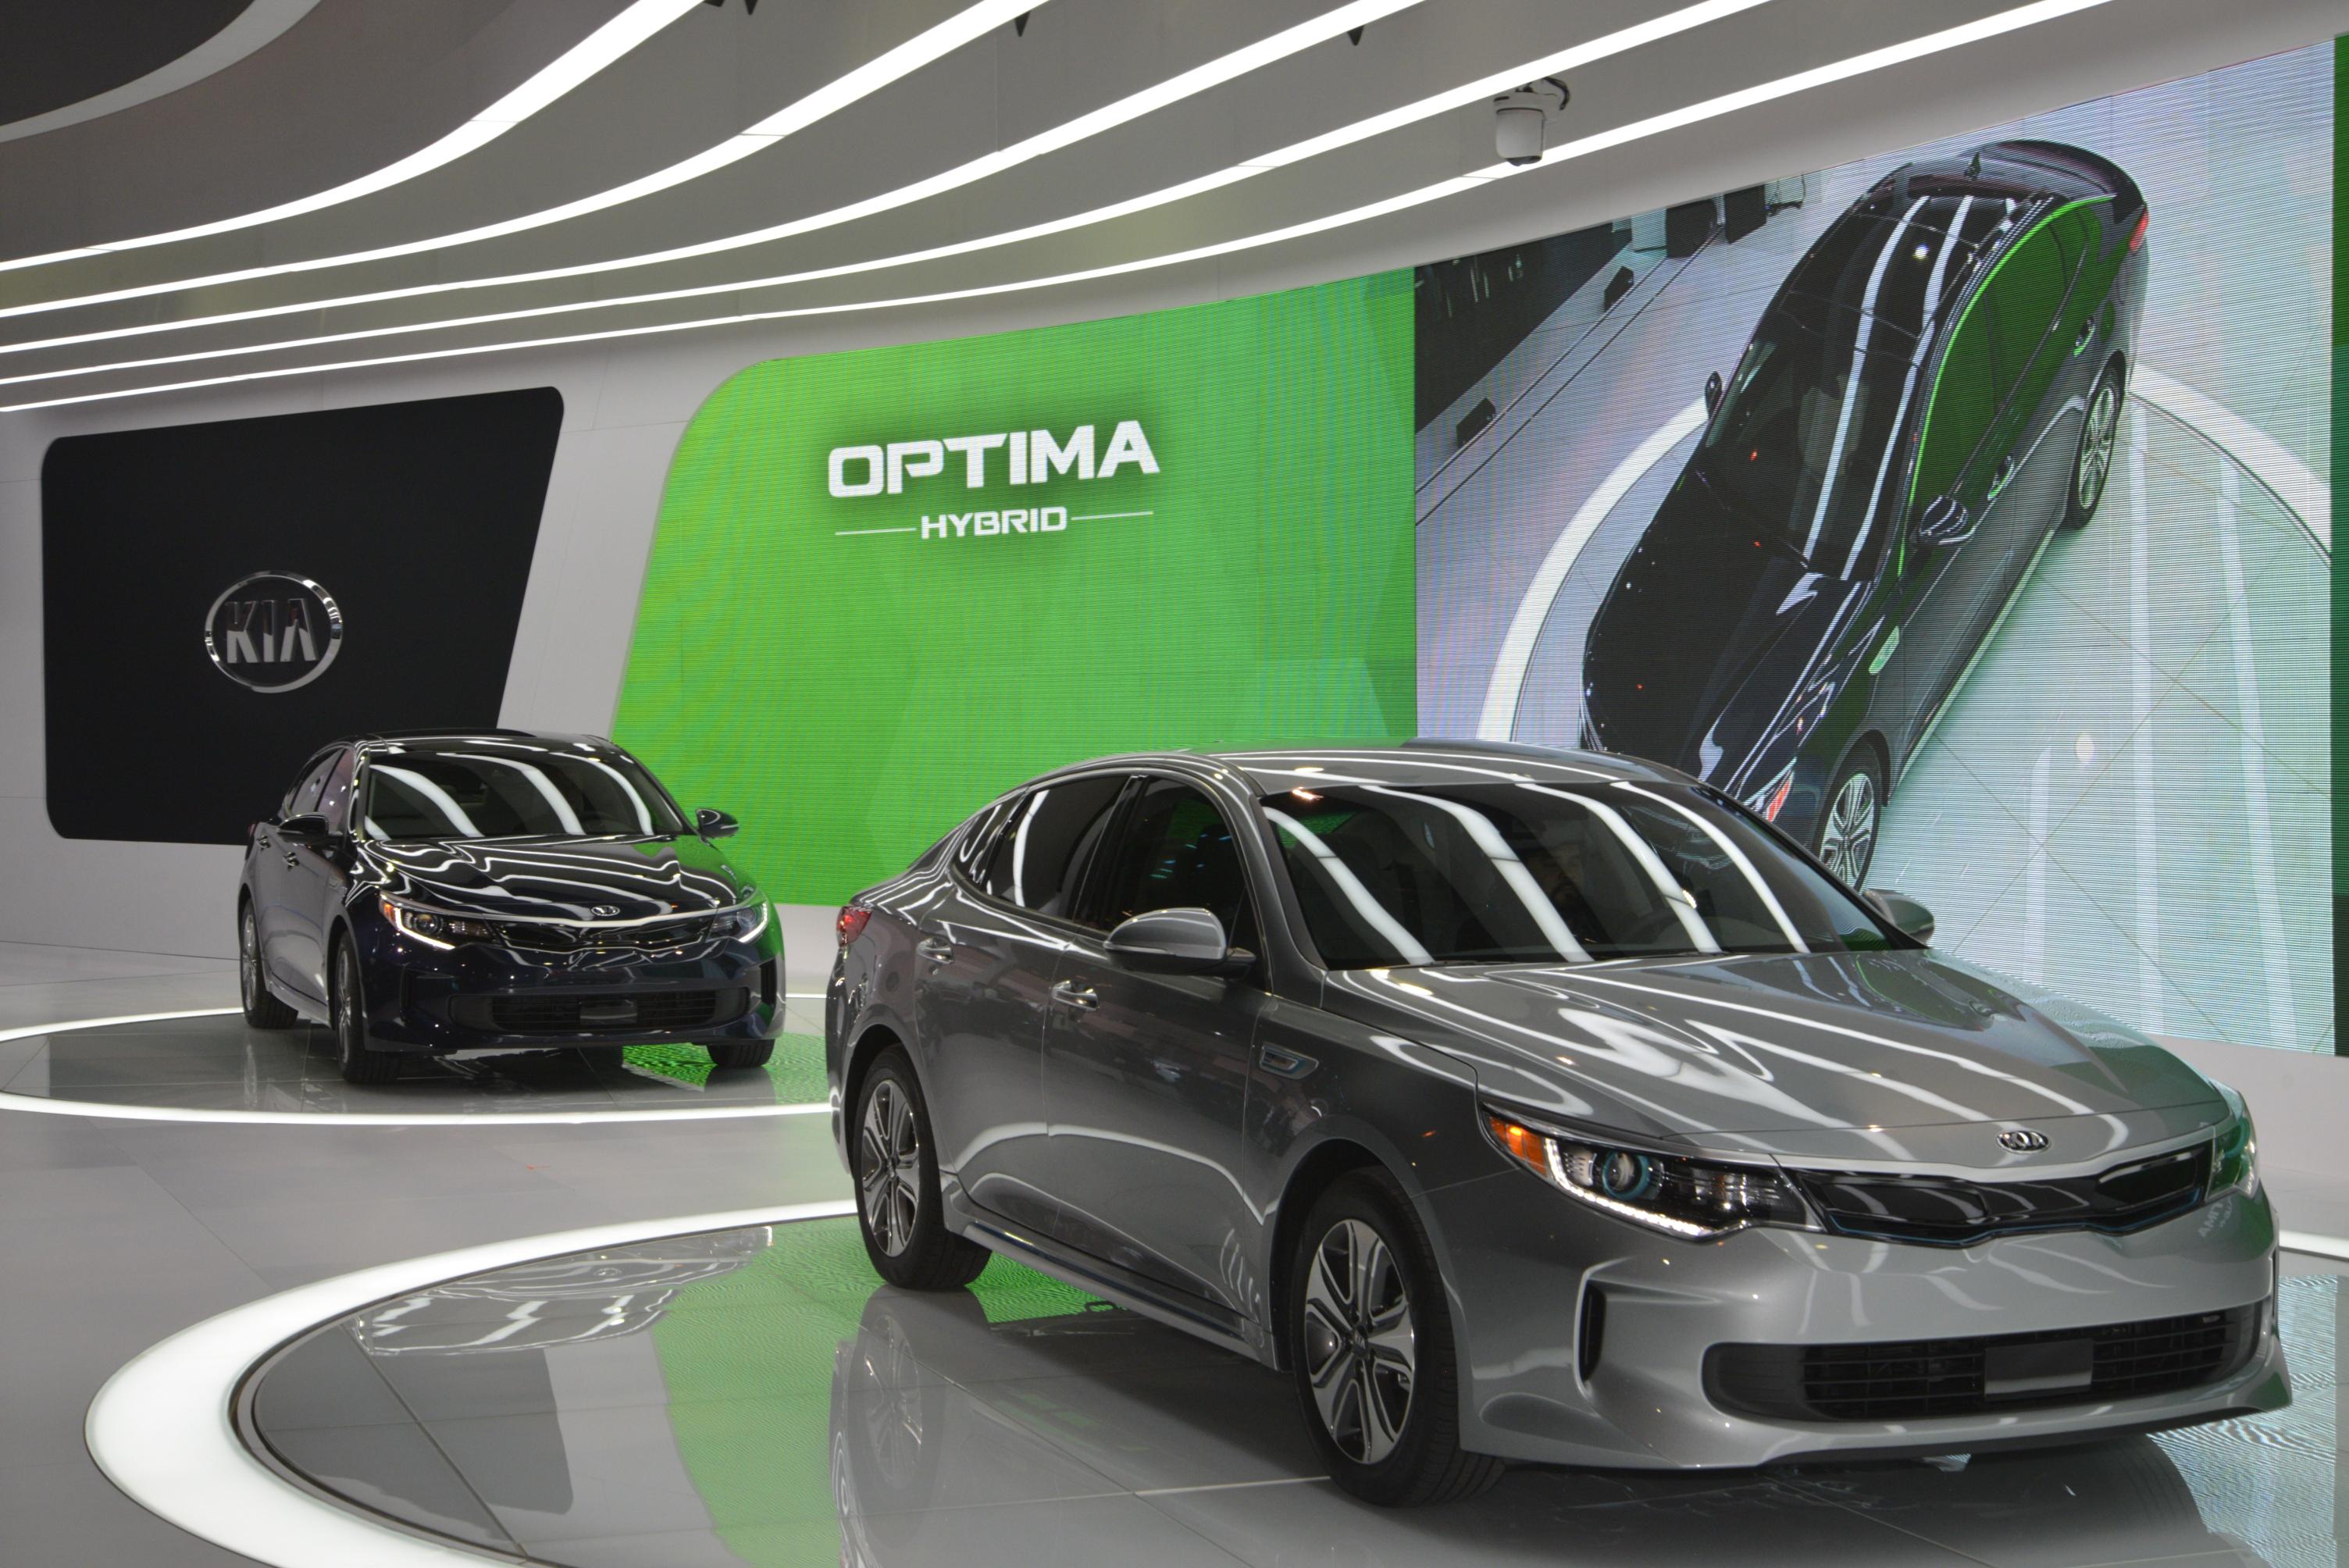 Kia Optima 2017. Kia Optima Hybrid 2016. Киа Оптима гибрид. Киа Оптима 2015 гибрид. Киа гибрид отзывы